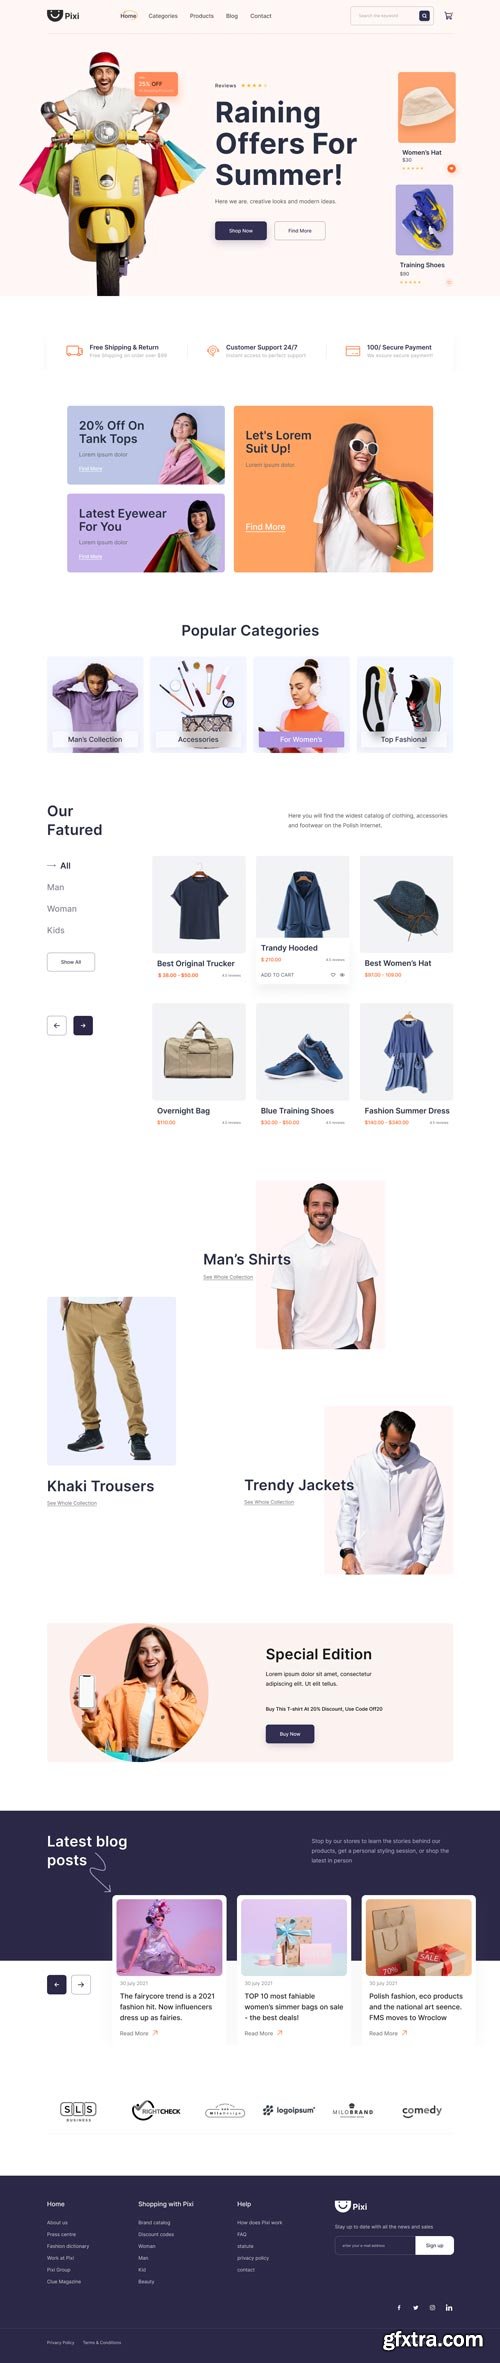 UiHut - Pixi Online Shopping Website - 12146